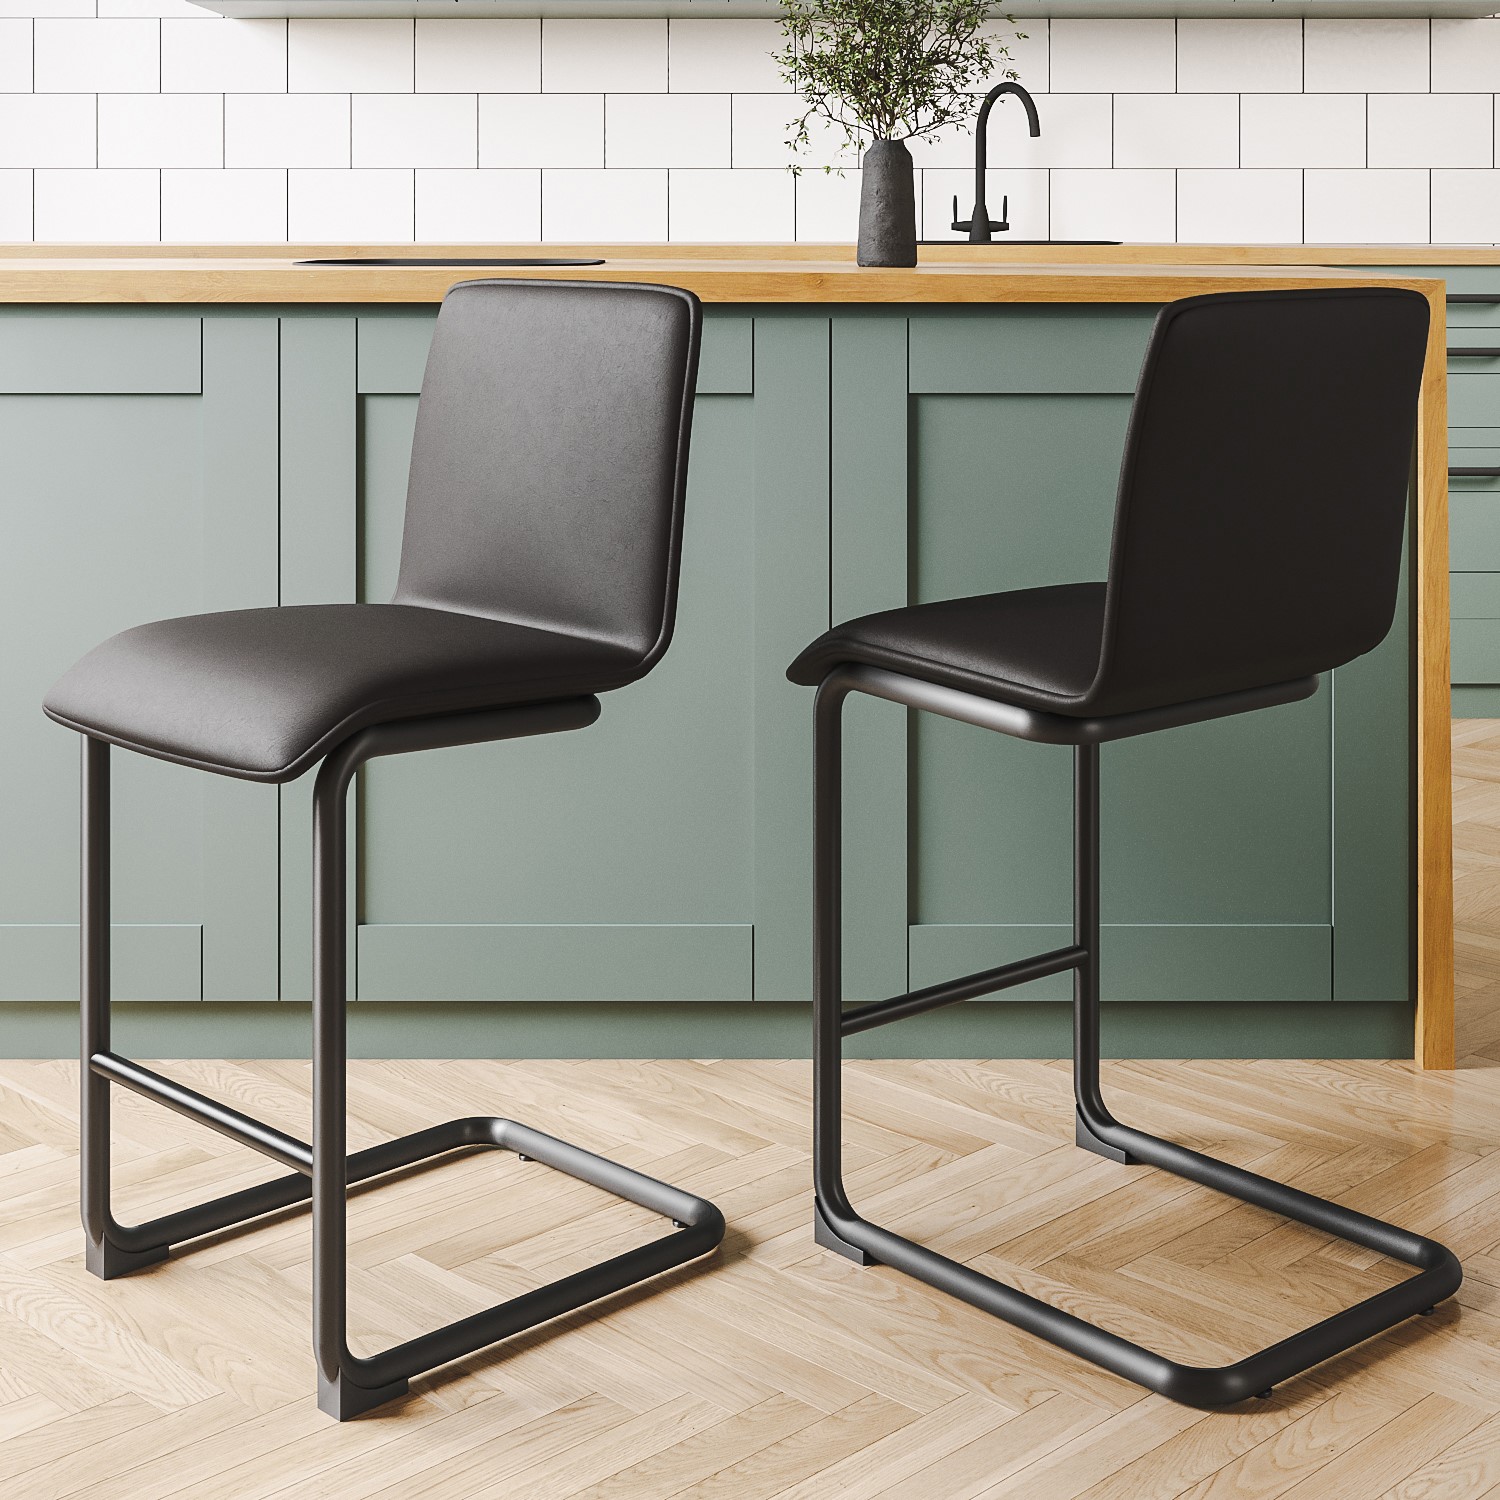 Photo of Set of 2 black faux leather cantilever kitchen stools - 66cm - lucas